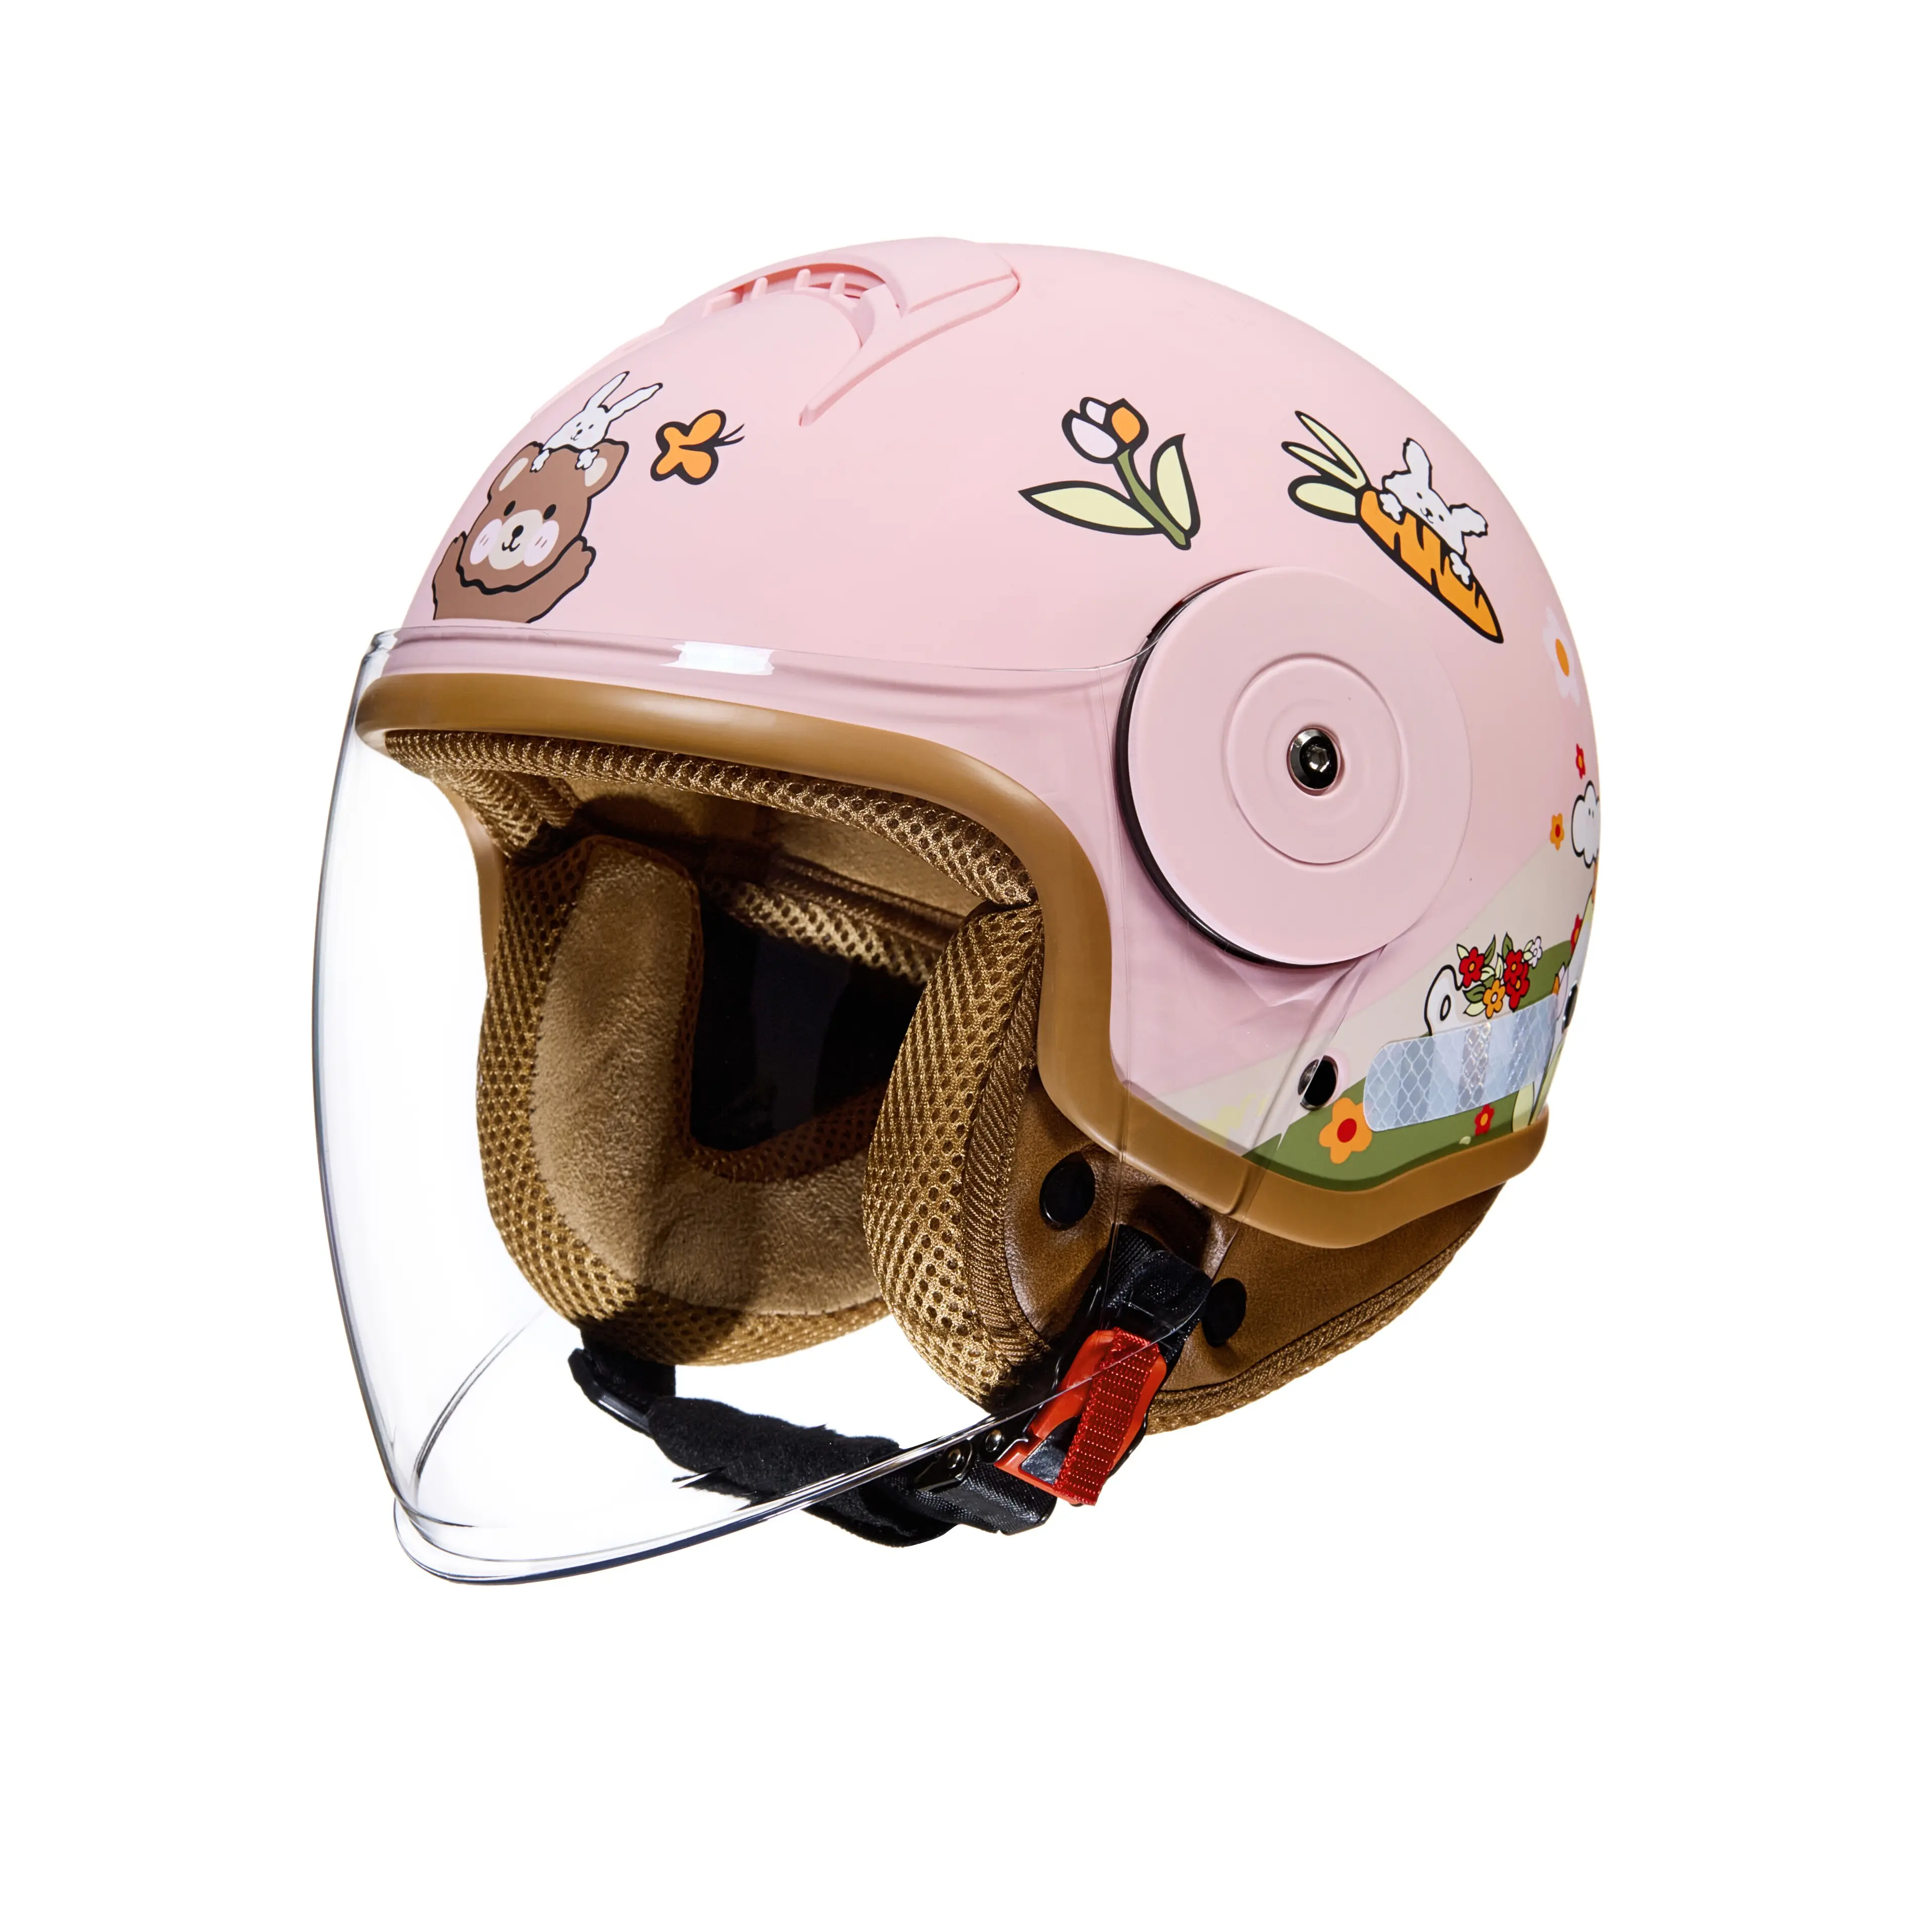 BYB/RNG счастливый розовый BY-750S персонализированный детский шлем защитный шлем персонализированный милый детский защитный шлем мотоциклетный шлем